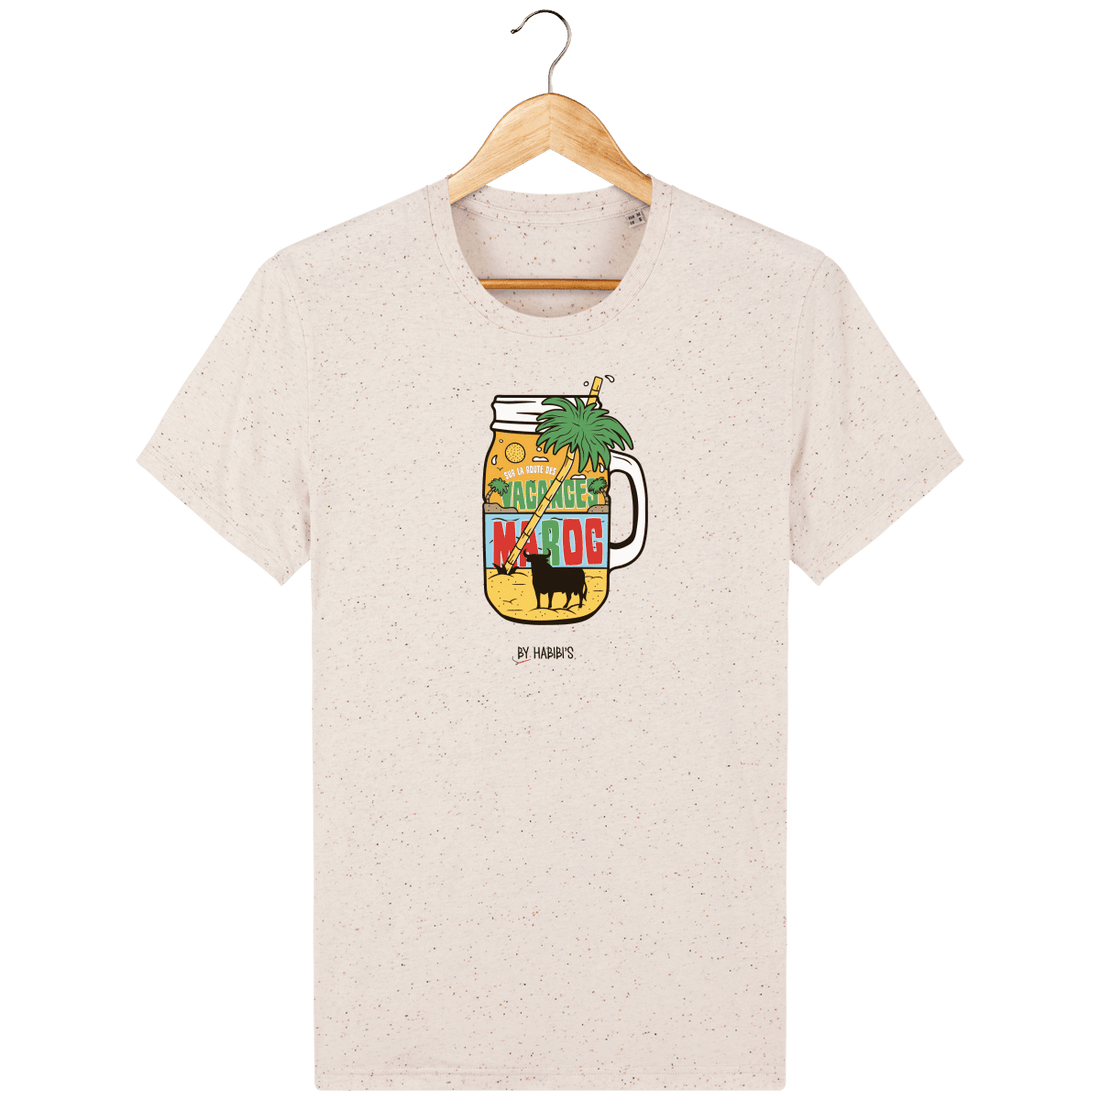 Unisexe>Tee-shirts - T-shirt Homme <br> Été Maroc